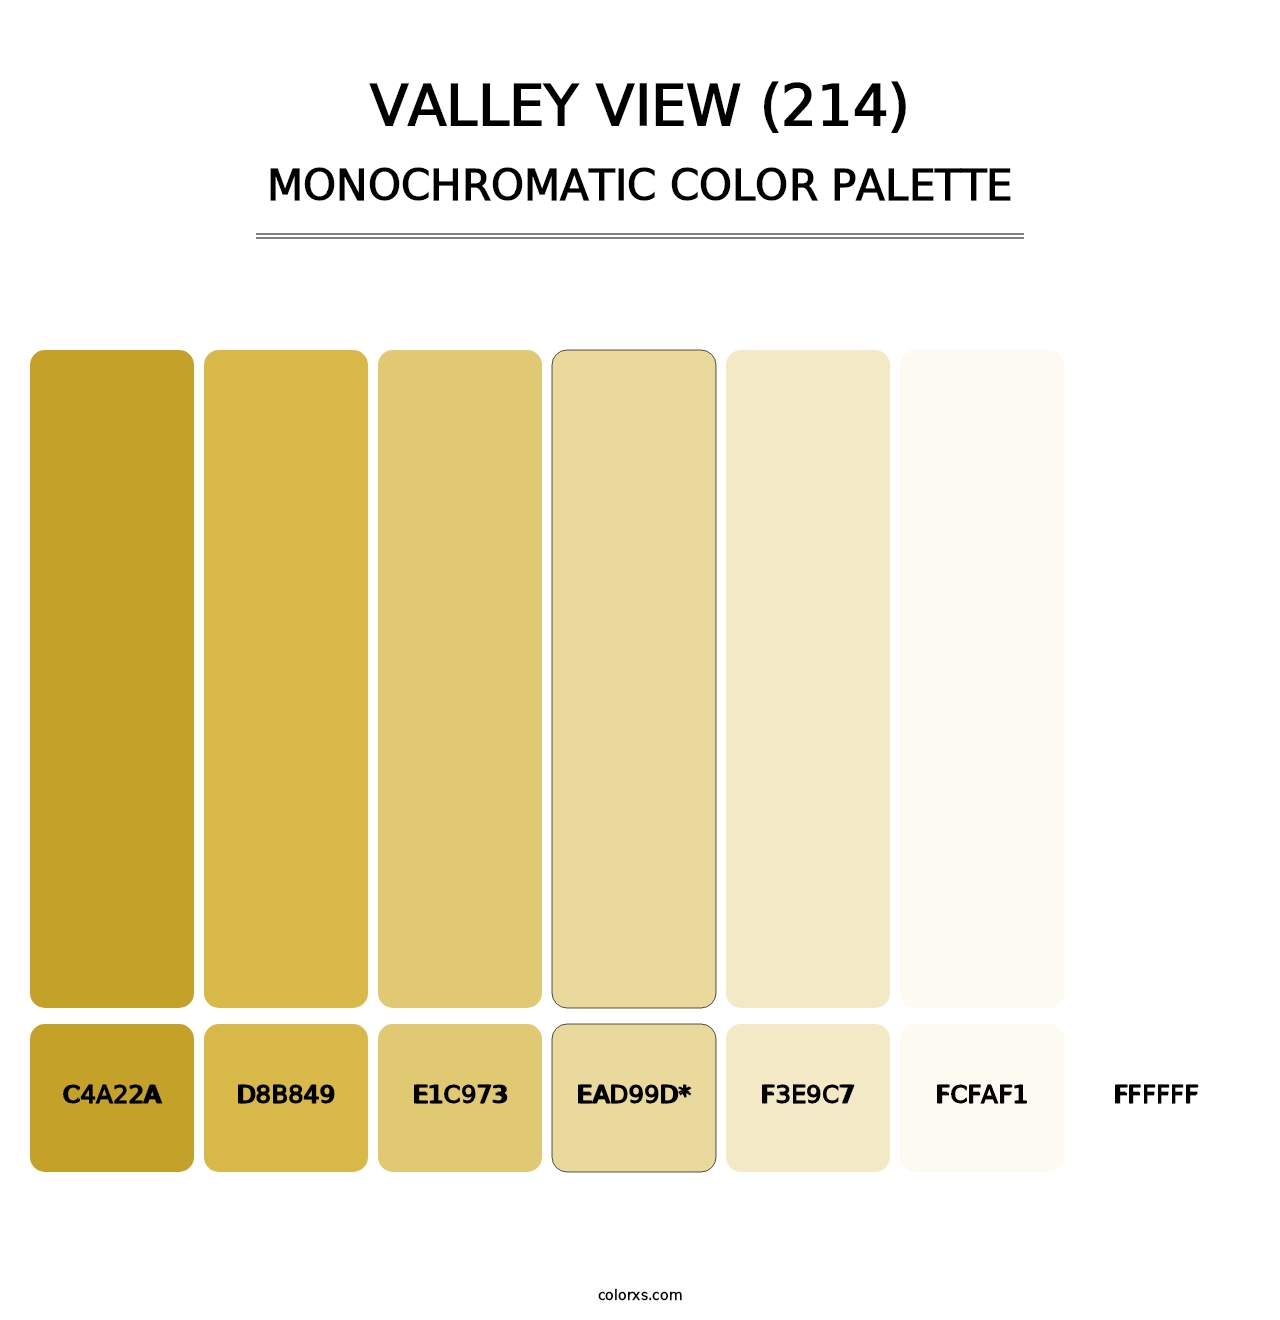 Valley View (214) - Monochromatic Color Palette